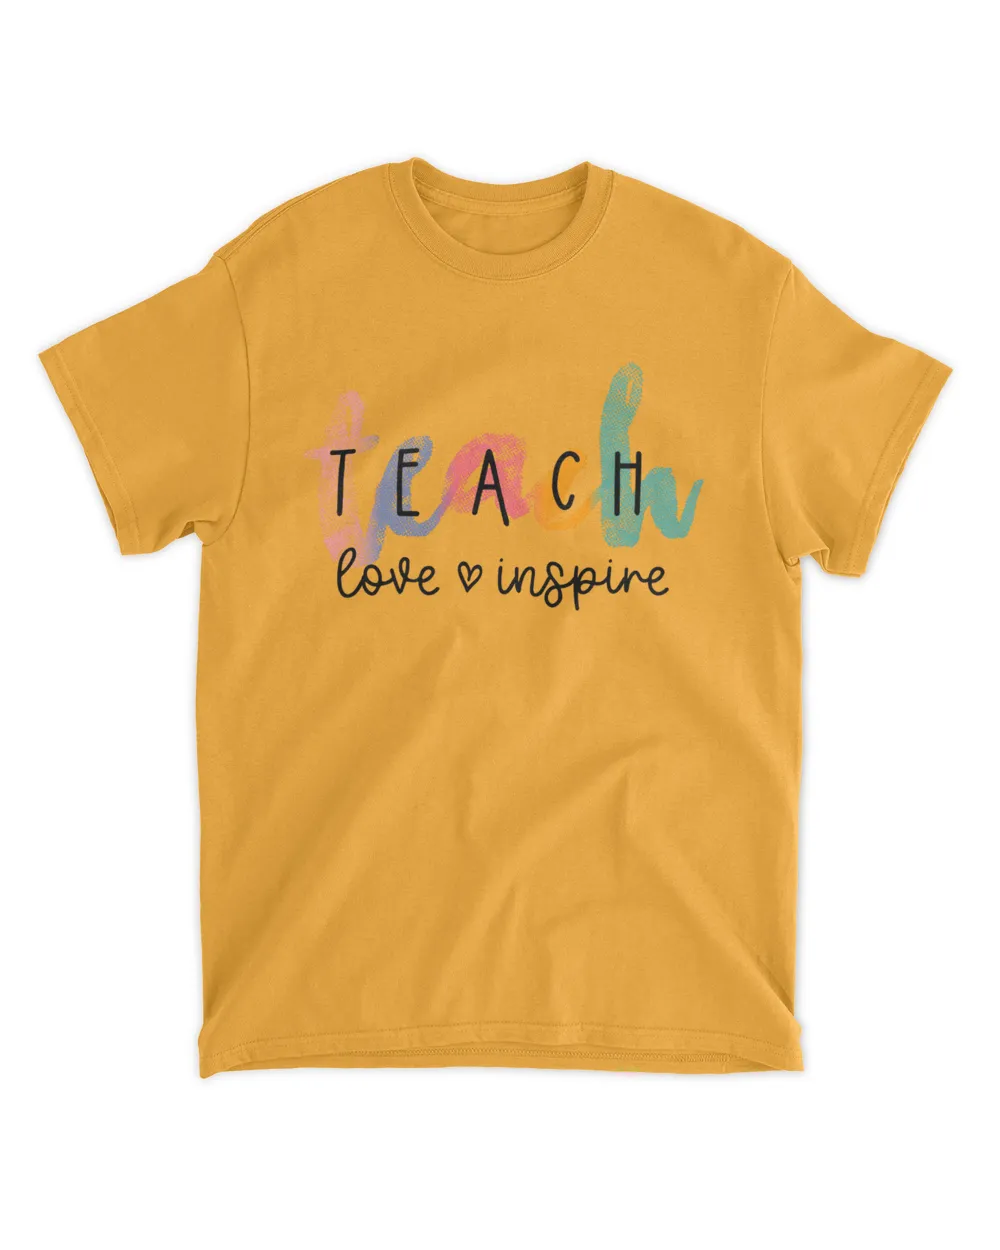 Teach Love Inspire Back to School(4)